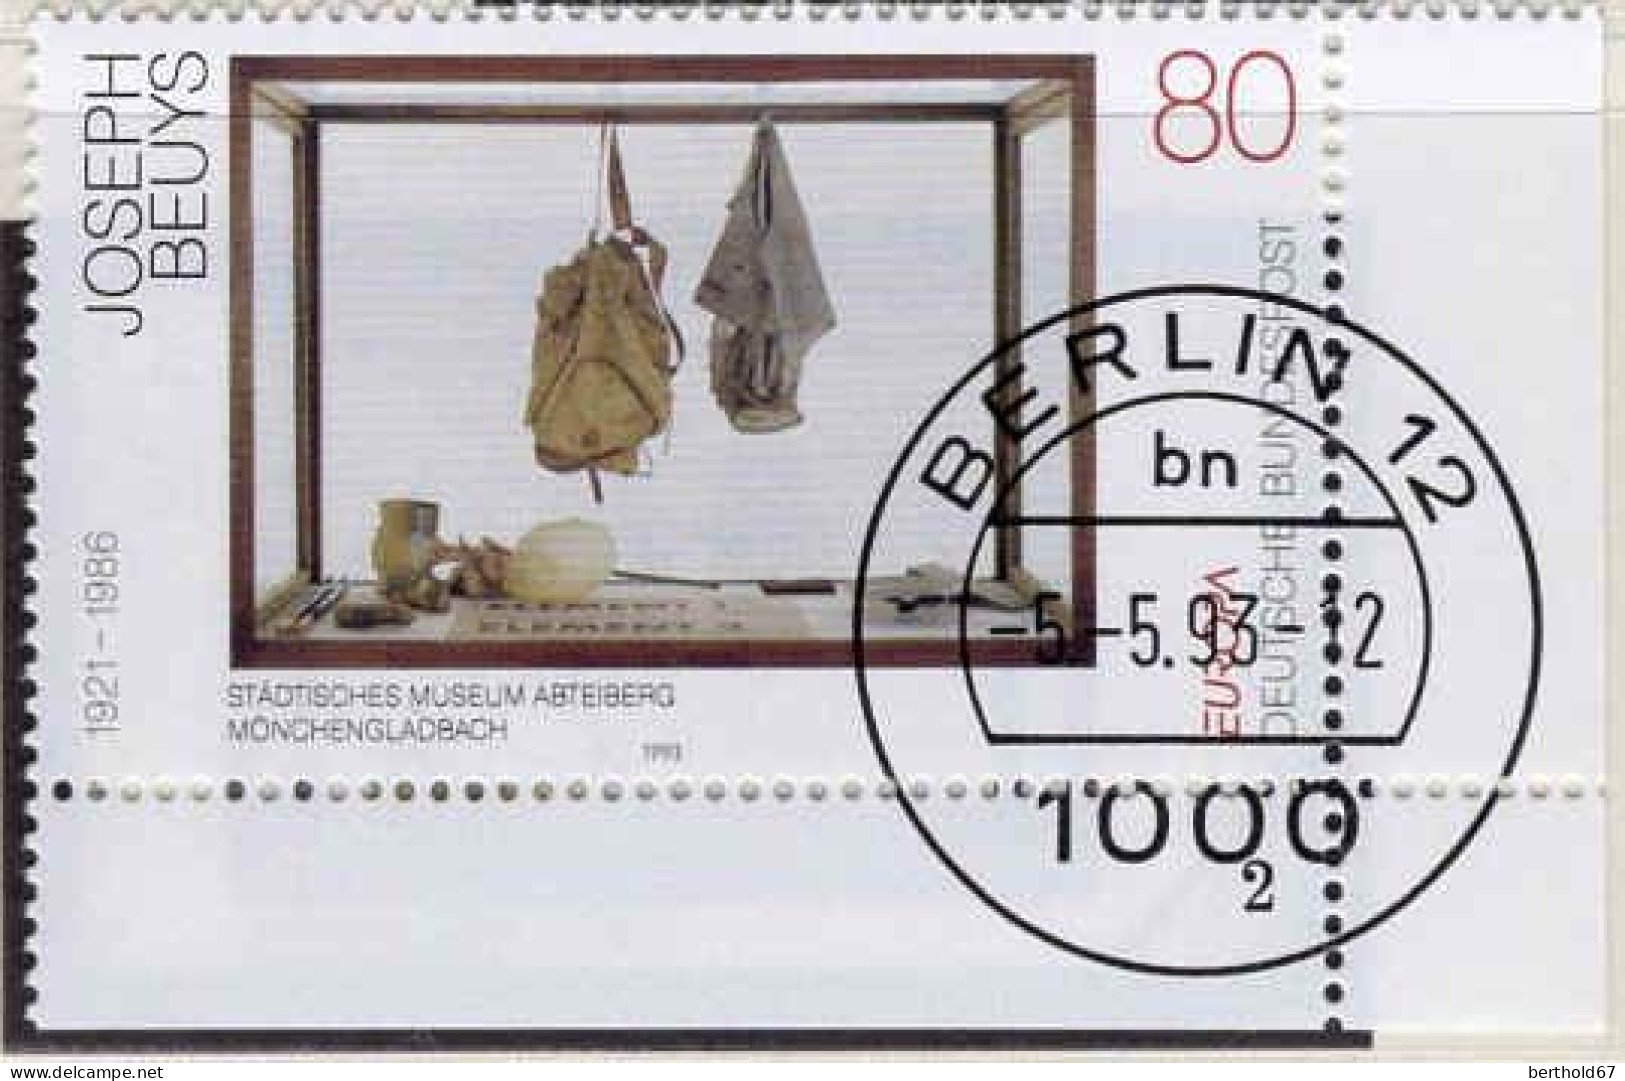 RFA Poste Obl Yv:1504 Mi:1673 Europa Joseph Beuys Coin D.feuille (TB Cachet à Date) Berlin 5-5-93 - Oblitérés